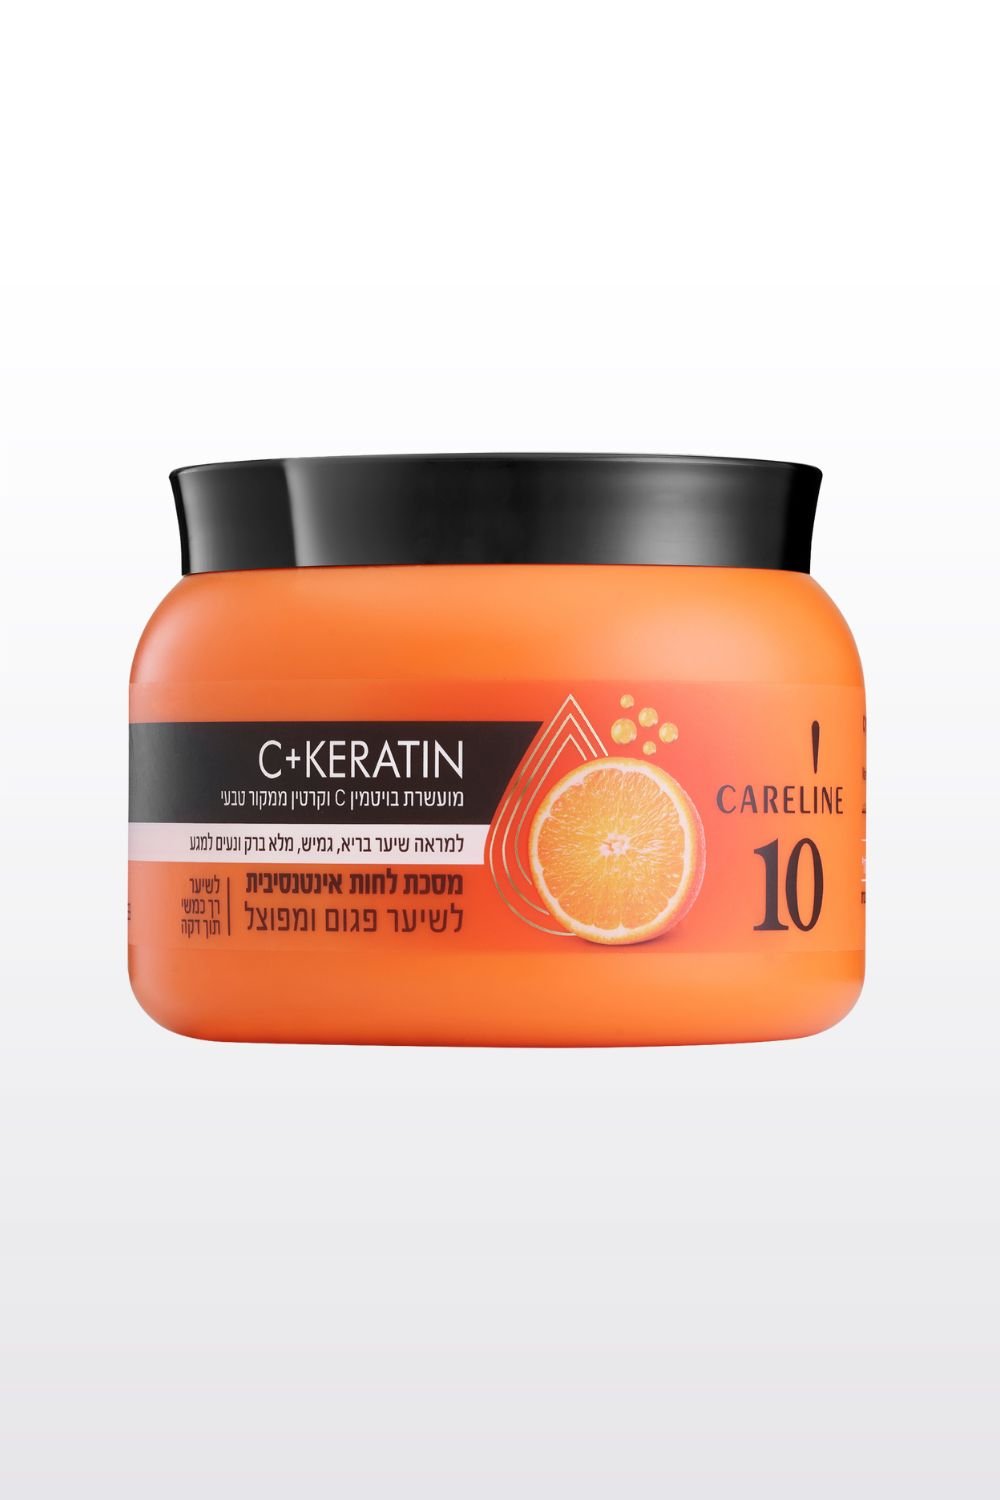 CARELINE - קרליין 10 מסכת לחות אינטנסיבית ויטמין C וקרטין 500 מ"ל - MASHBIR//365